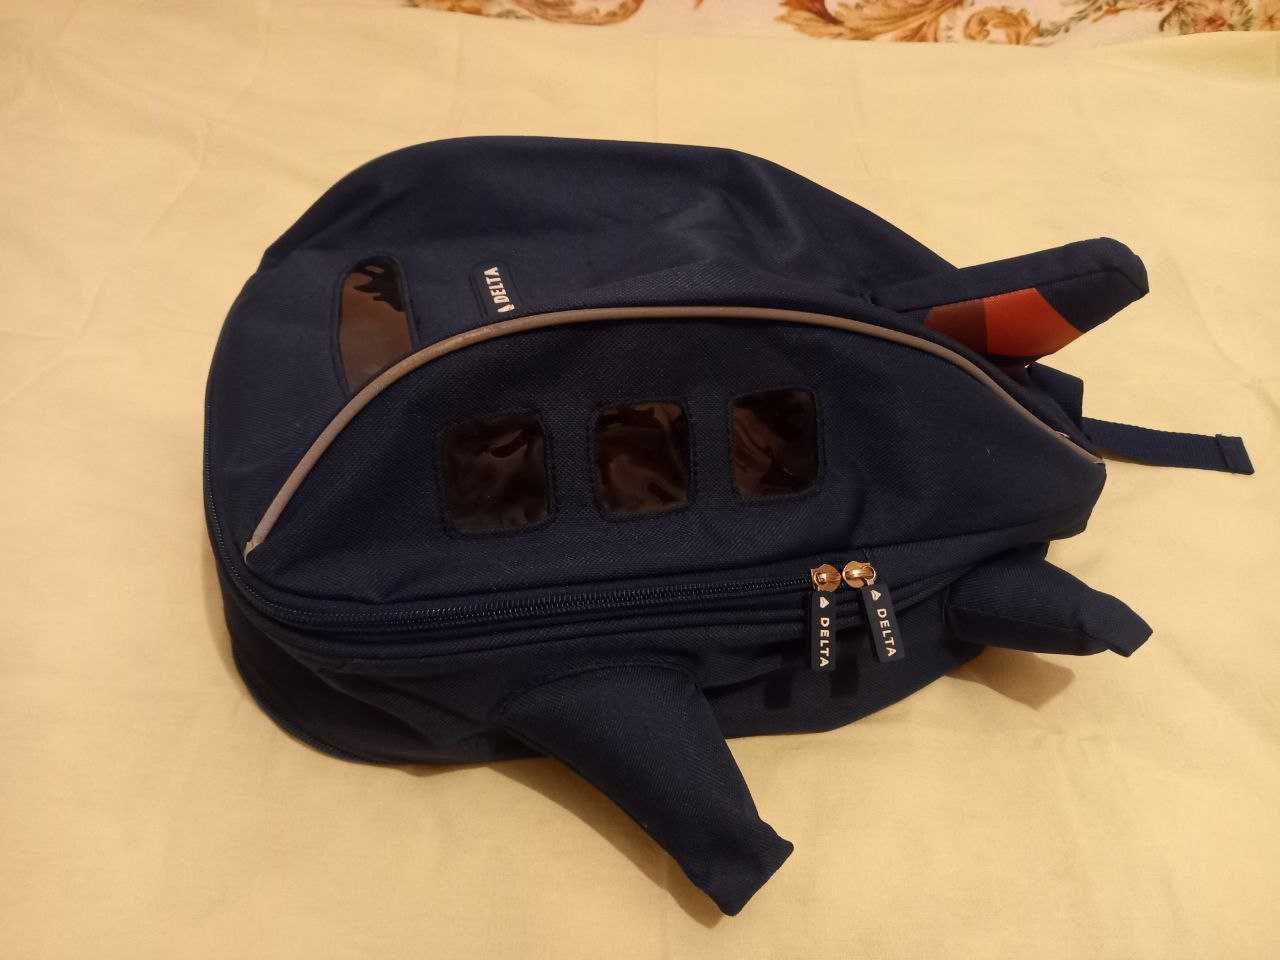 Рюкзак дитячий Delta літак Рюкзак для садочка школи наплечник детский